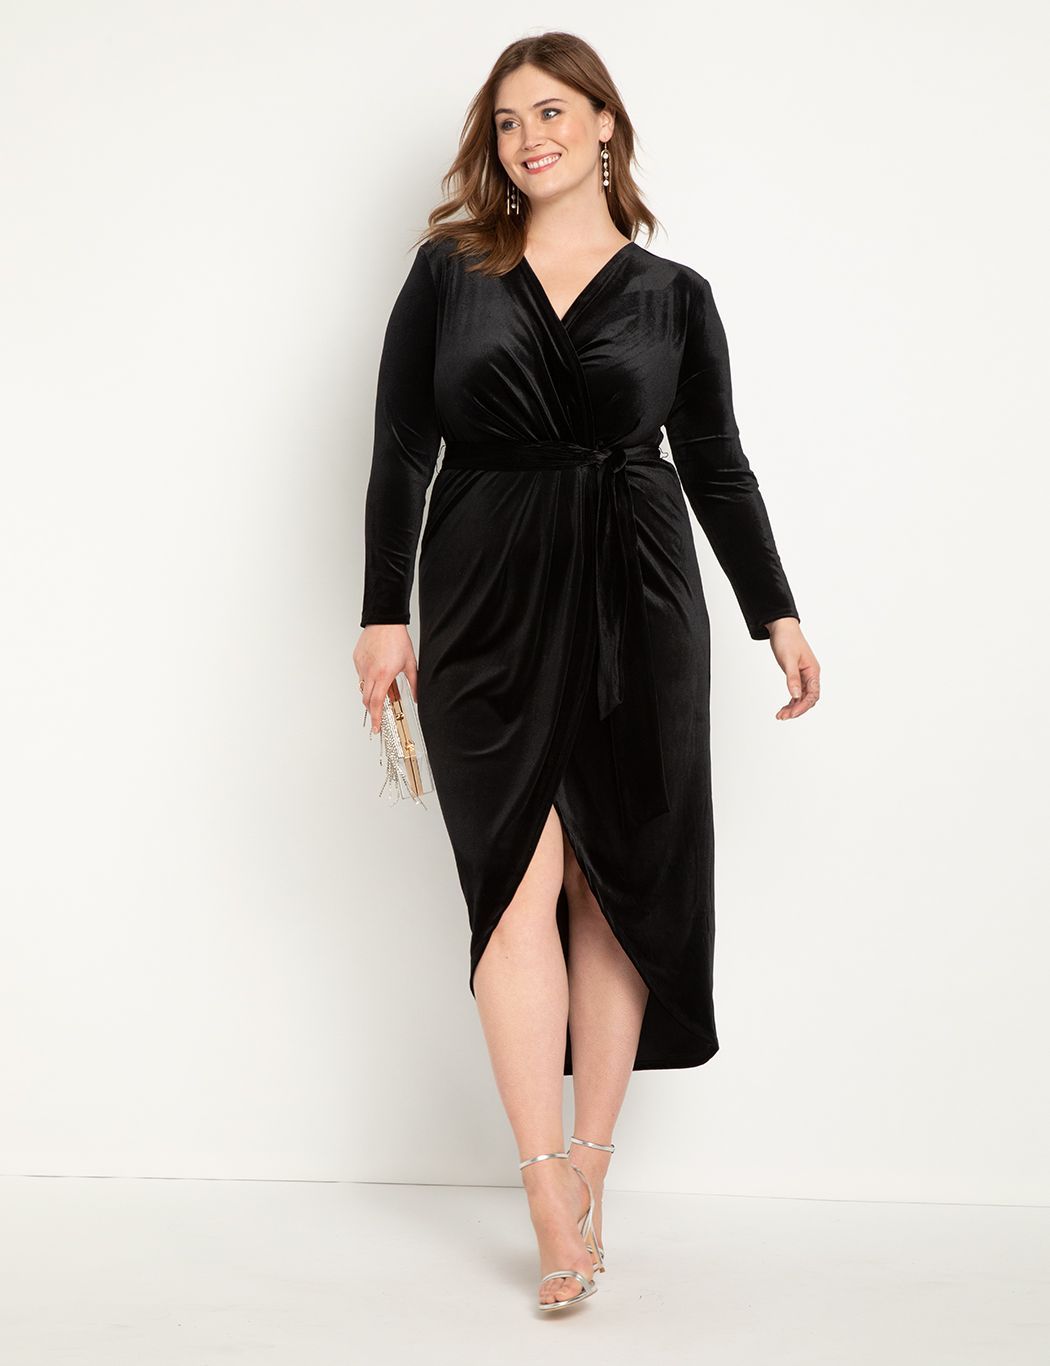 Velvet Wrap Dress With Tie | Women's Plus Size Dresses | ELOQUII | Eloquii